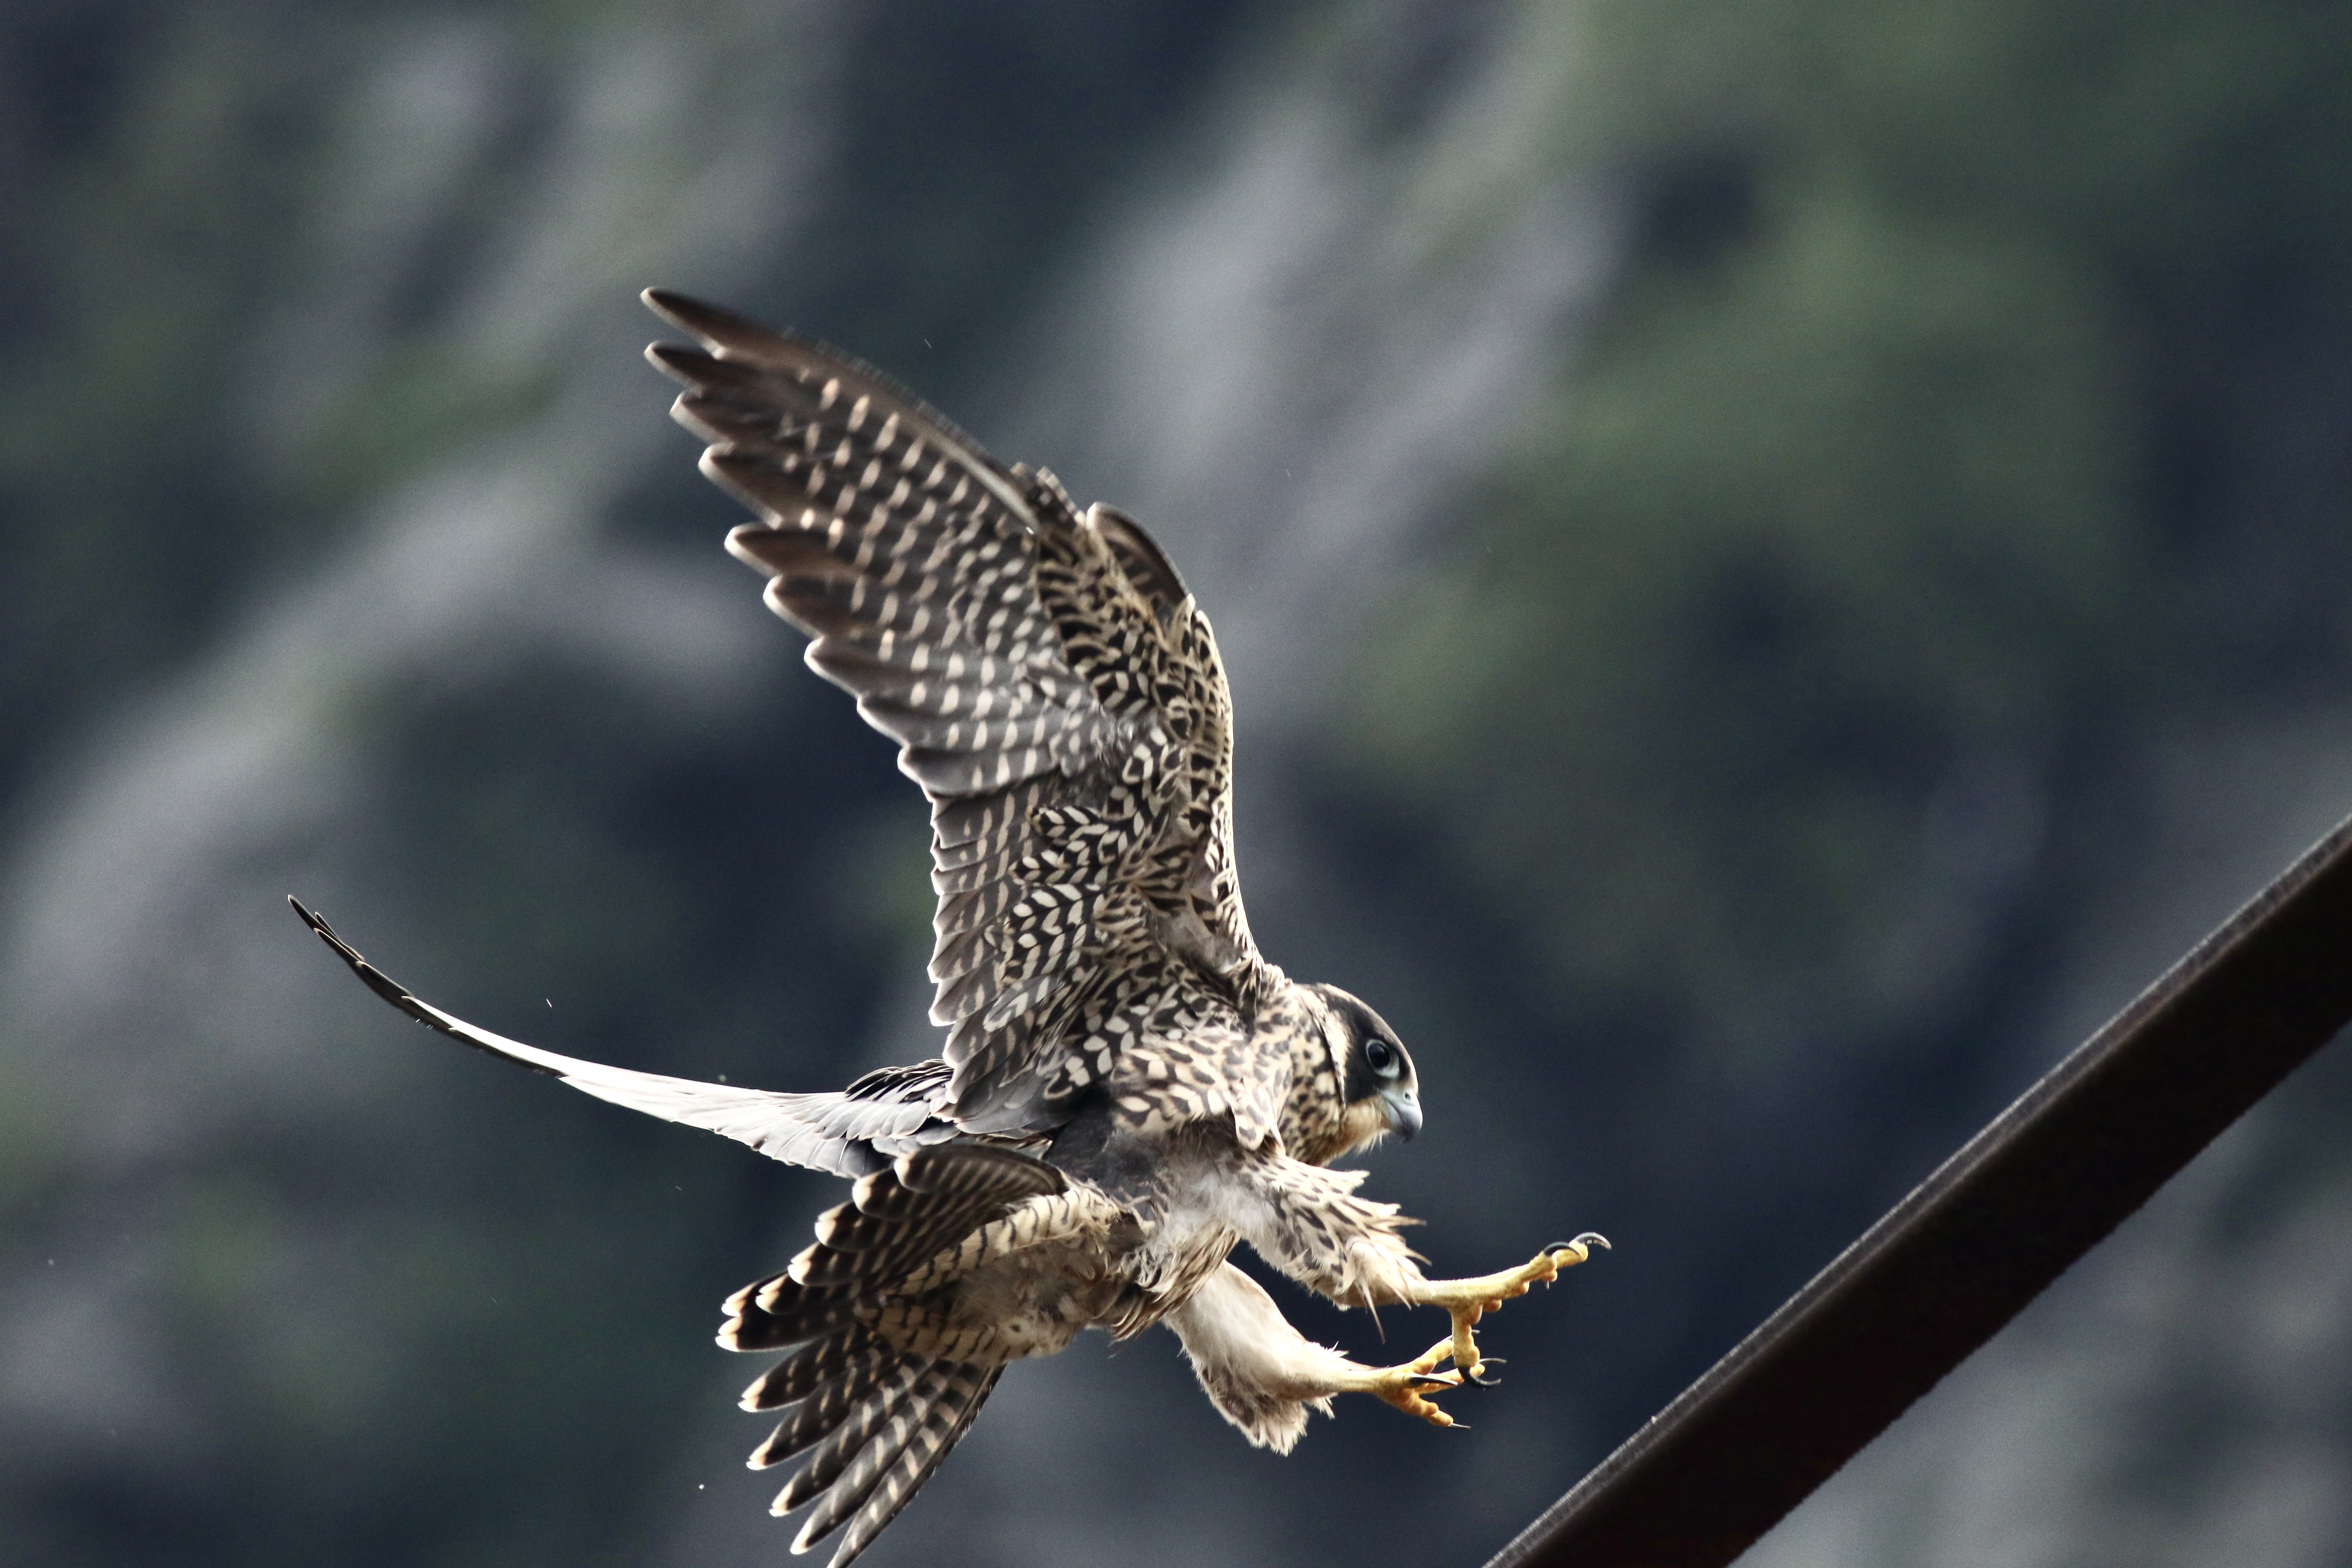 A juvenile peregrine falcon lands on a metal railing.